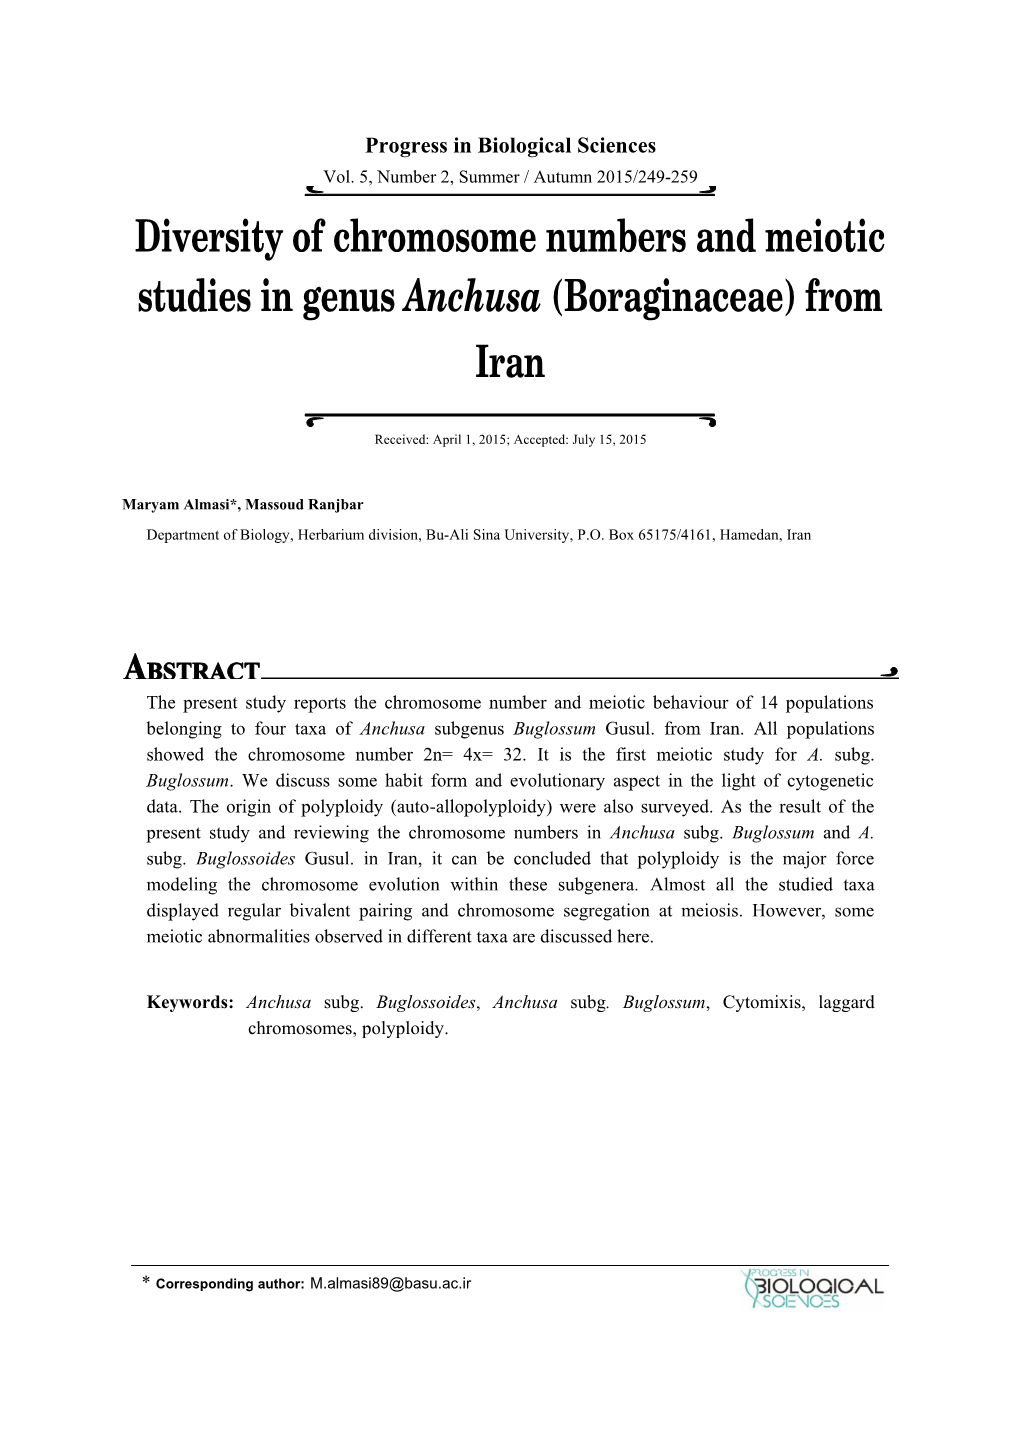 Diversity of Chromosome Numbers and Meiotic Studies in Genus Anchusa (Boraginaceae) from Iran